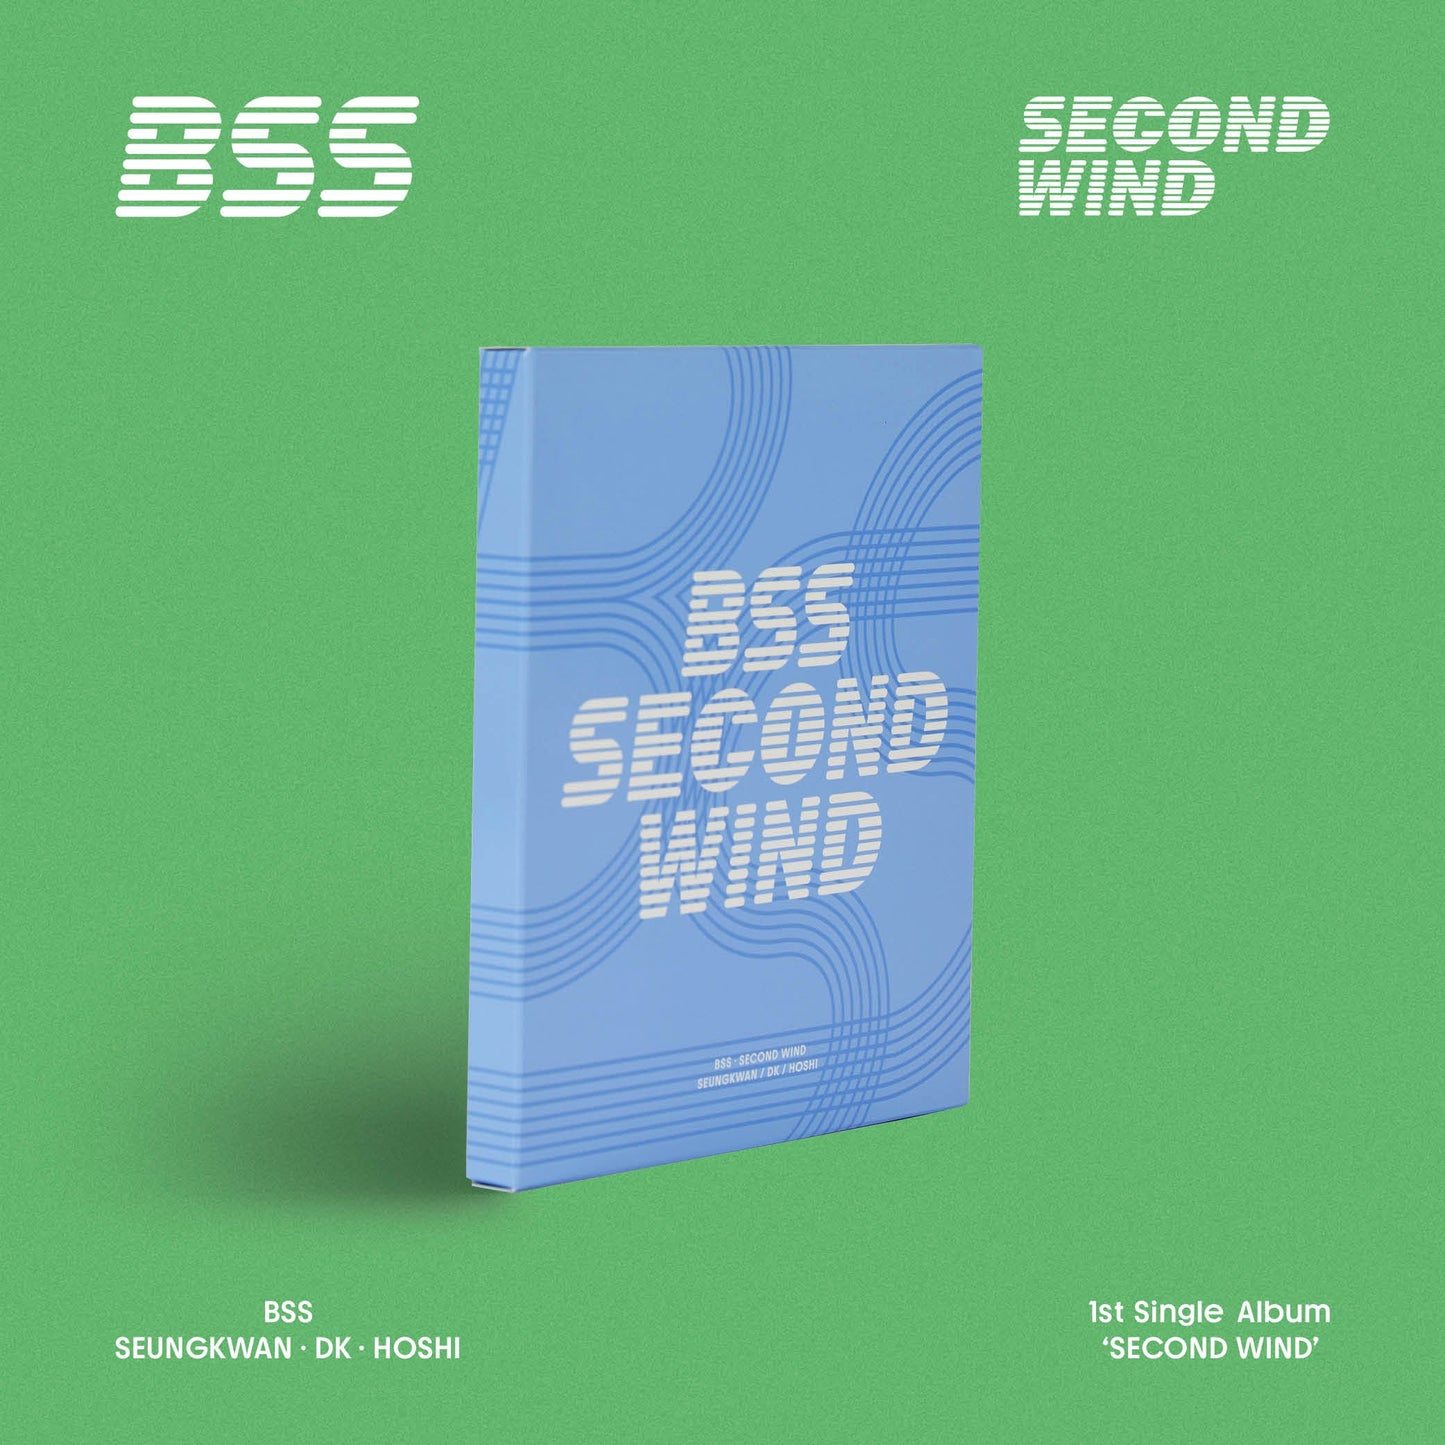 BSS (SEVENTEEN) 1ST SINGLE ALBUM 'SECOND WIND' COVER